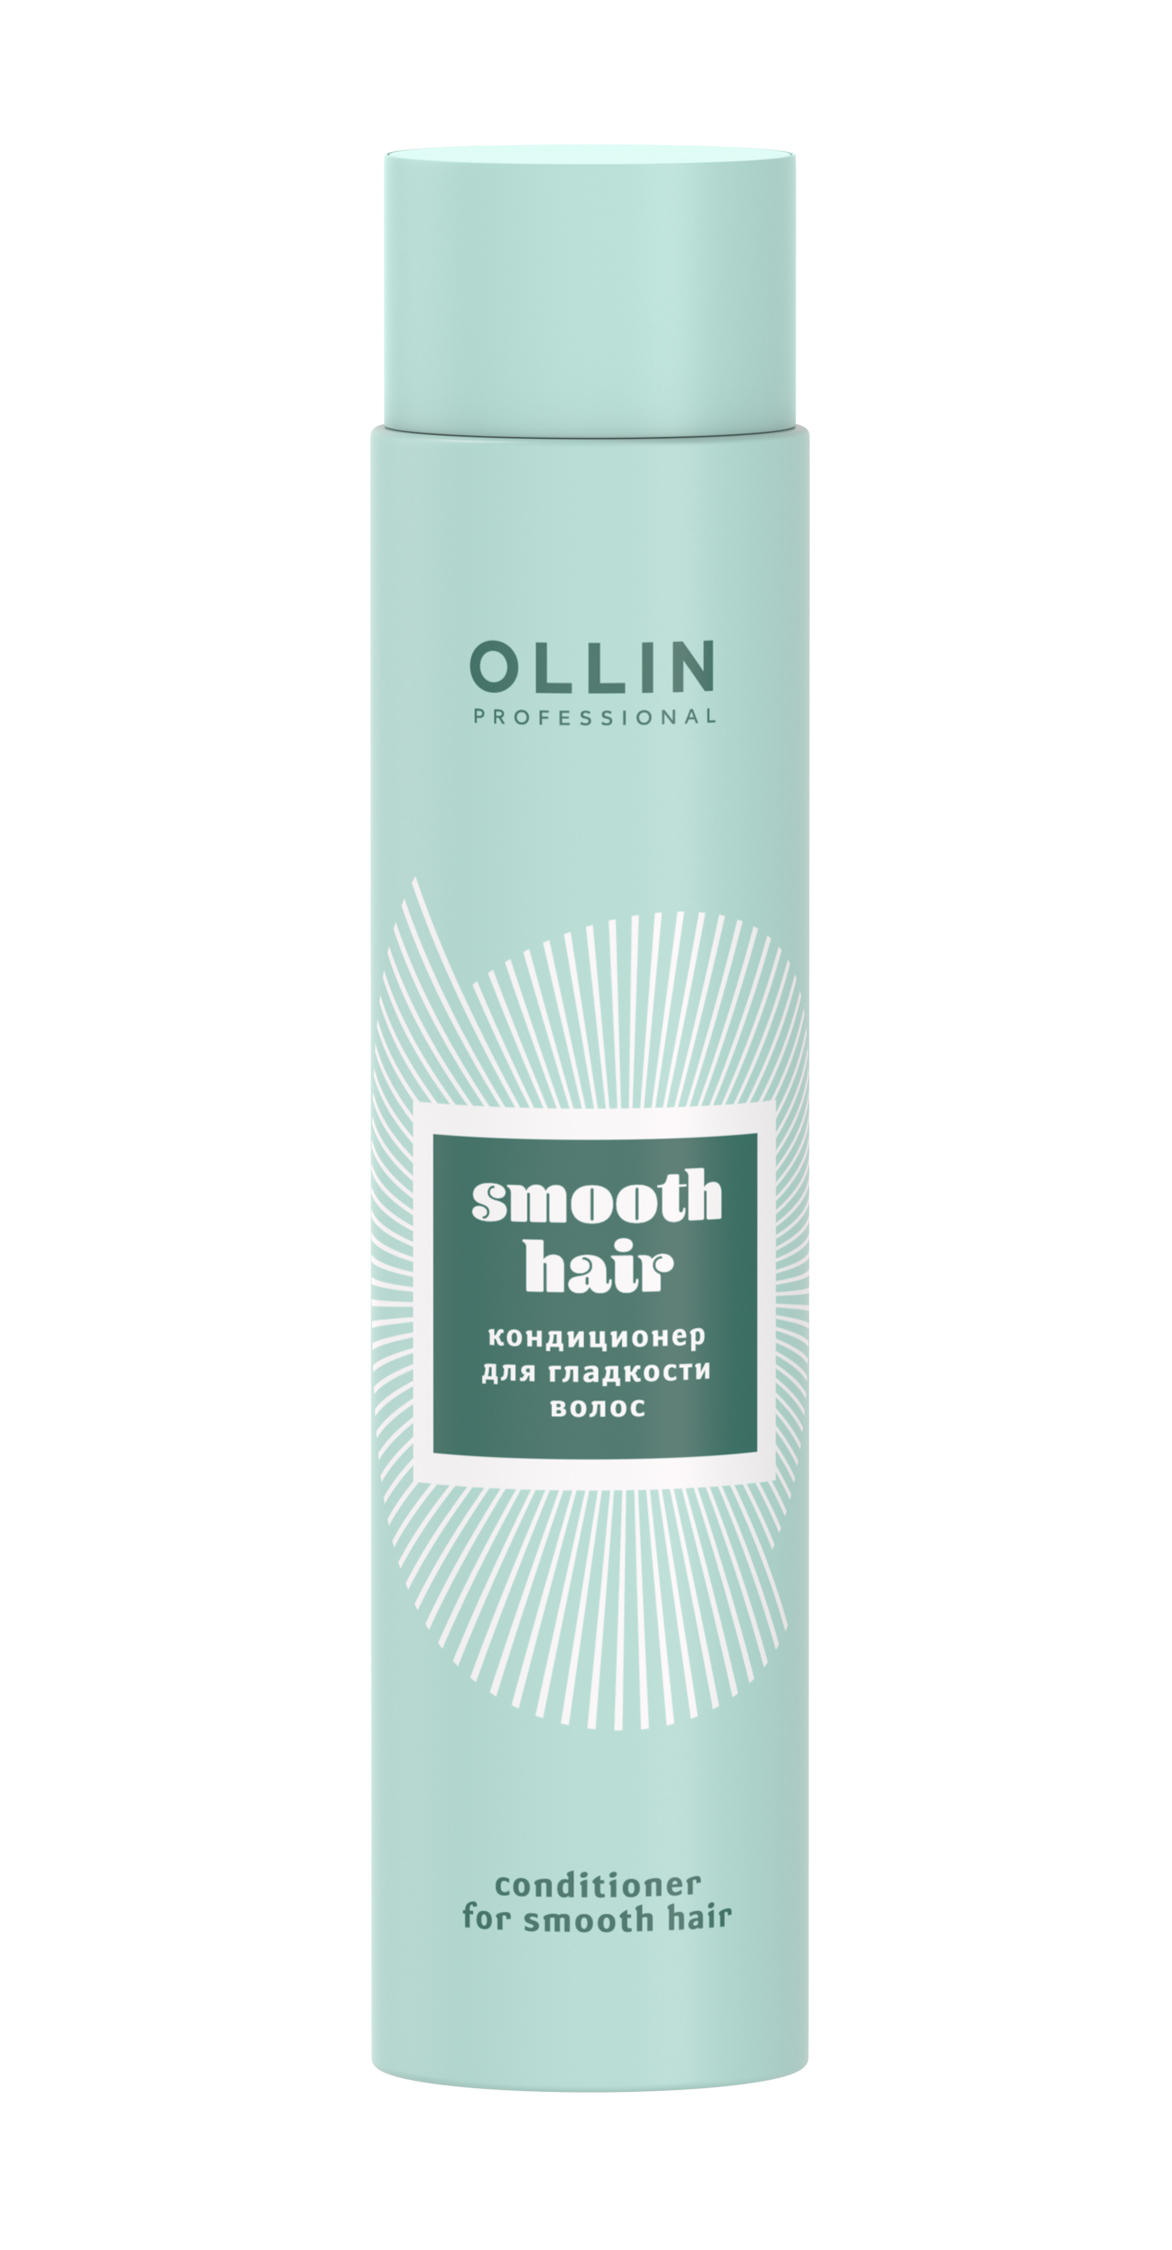 OLLIN SMOOTH HAIR Кондиционер для гладкости волос 300 мл 